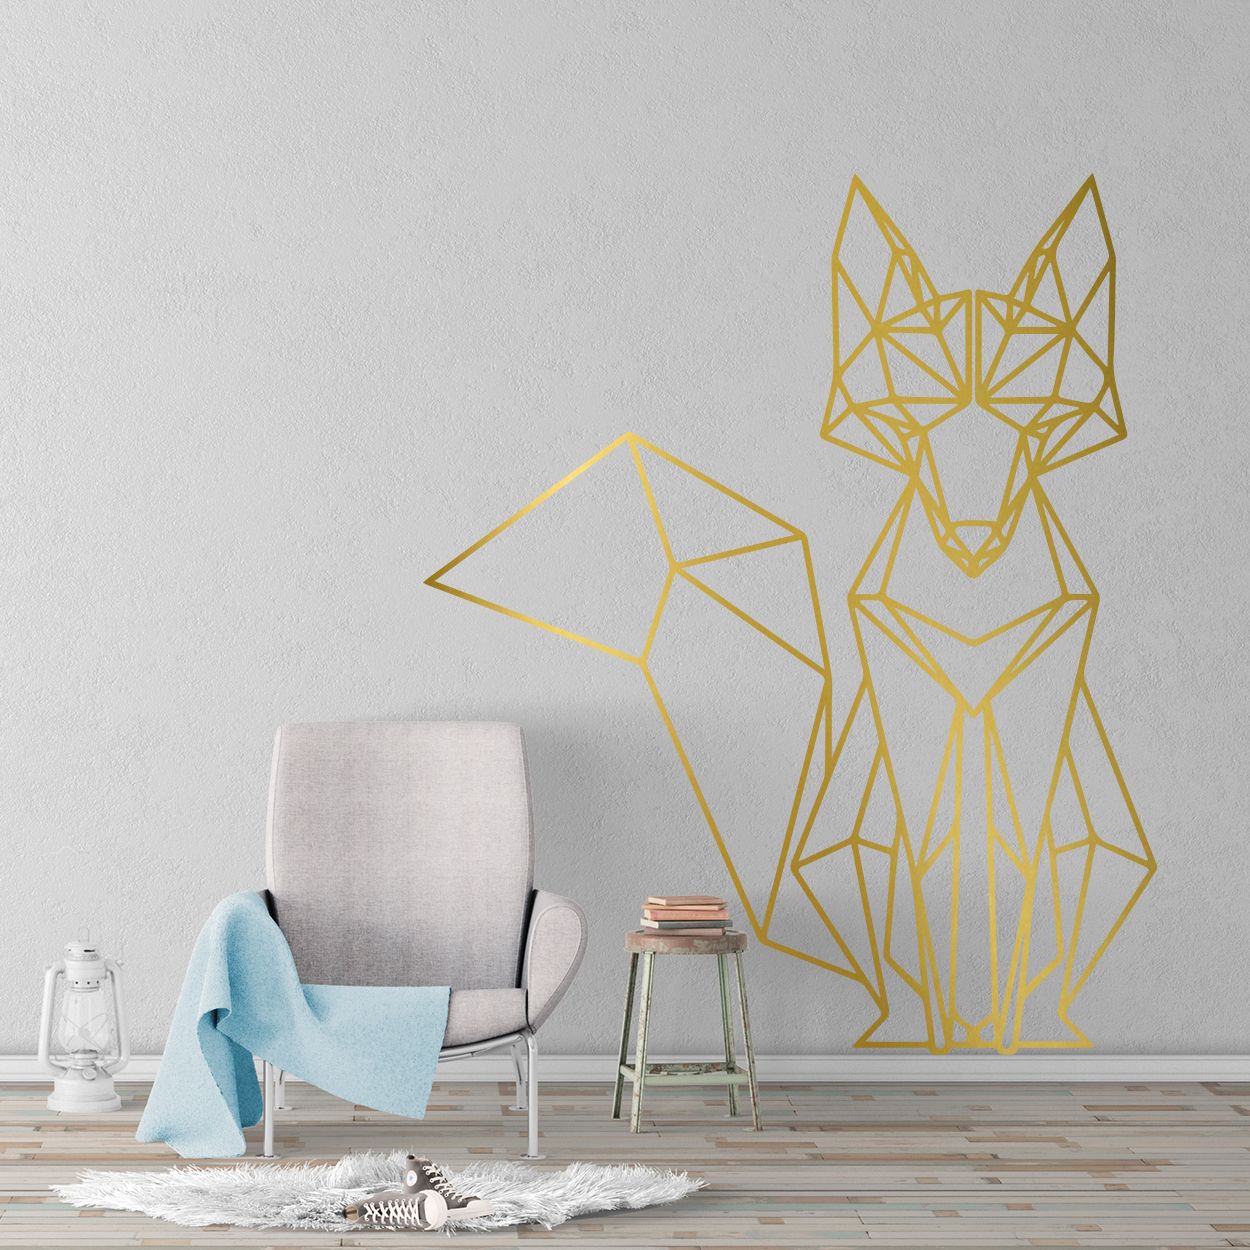 Australian Made Geometric Woodland Wall Art Geometric Fox Wall Decal Home Decor Vinyl Wall Stickers